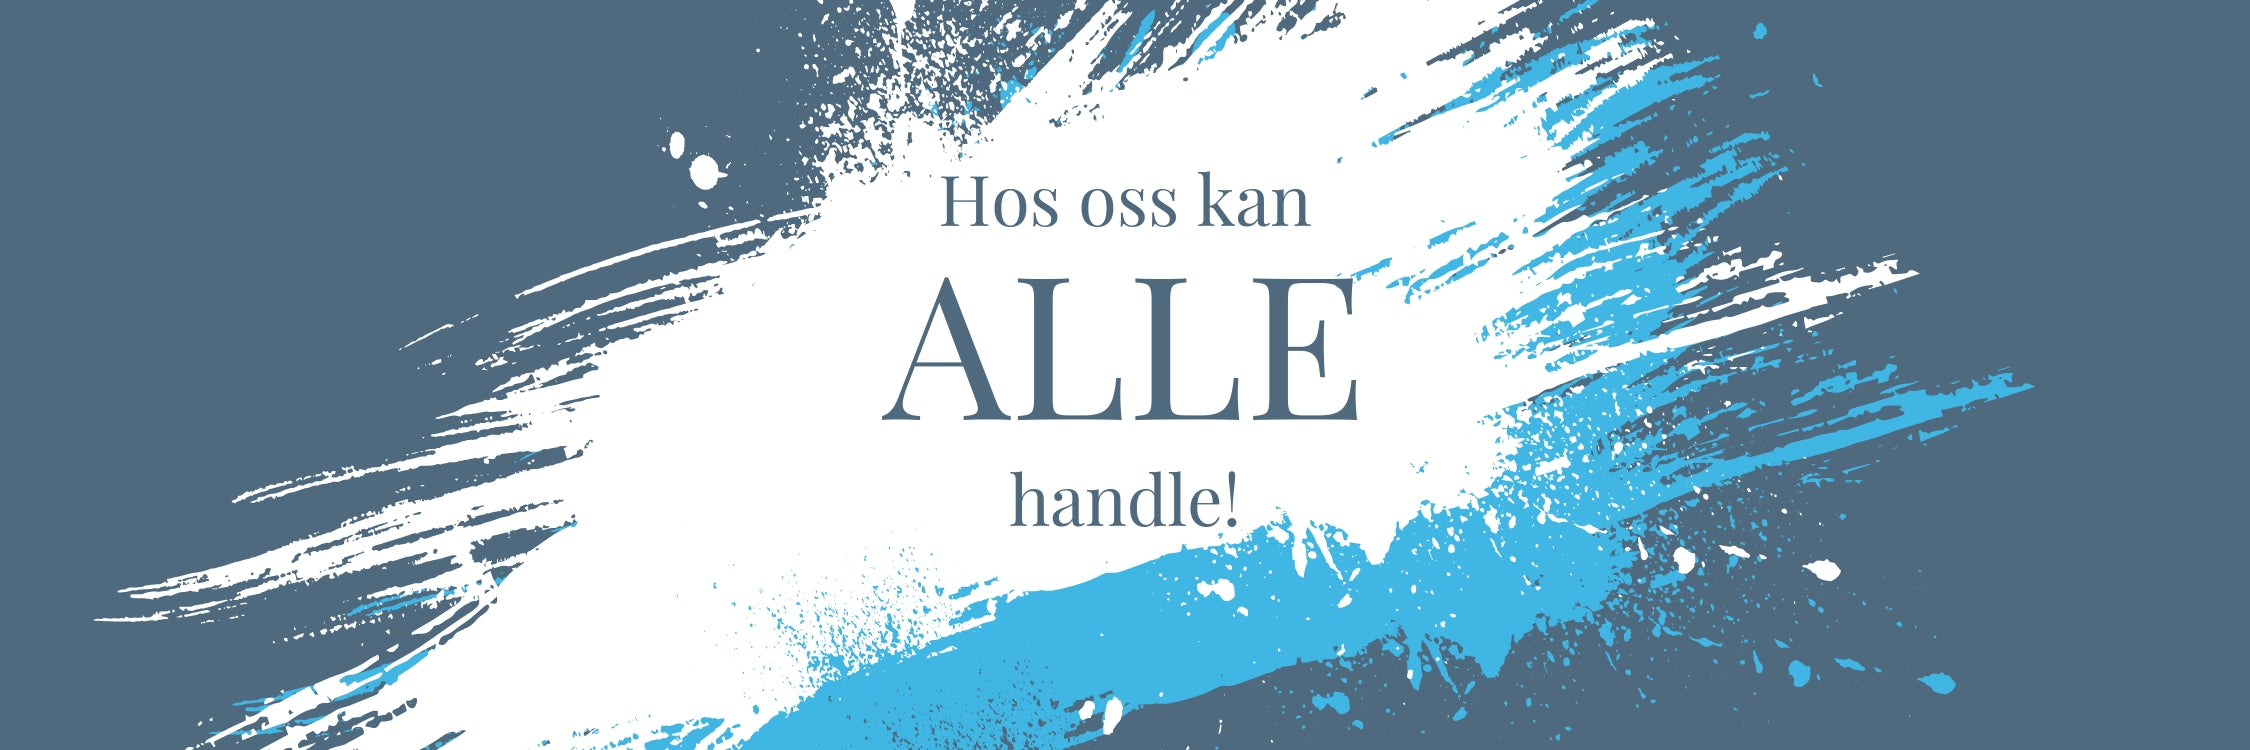 Kampanje - "Hos oss kan ALLE handle!" - In-Print Norge